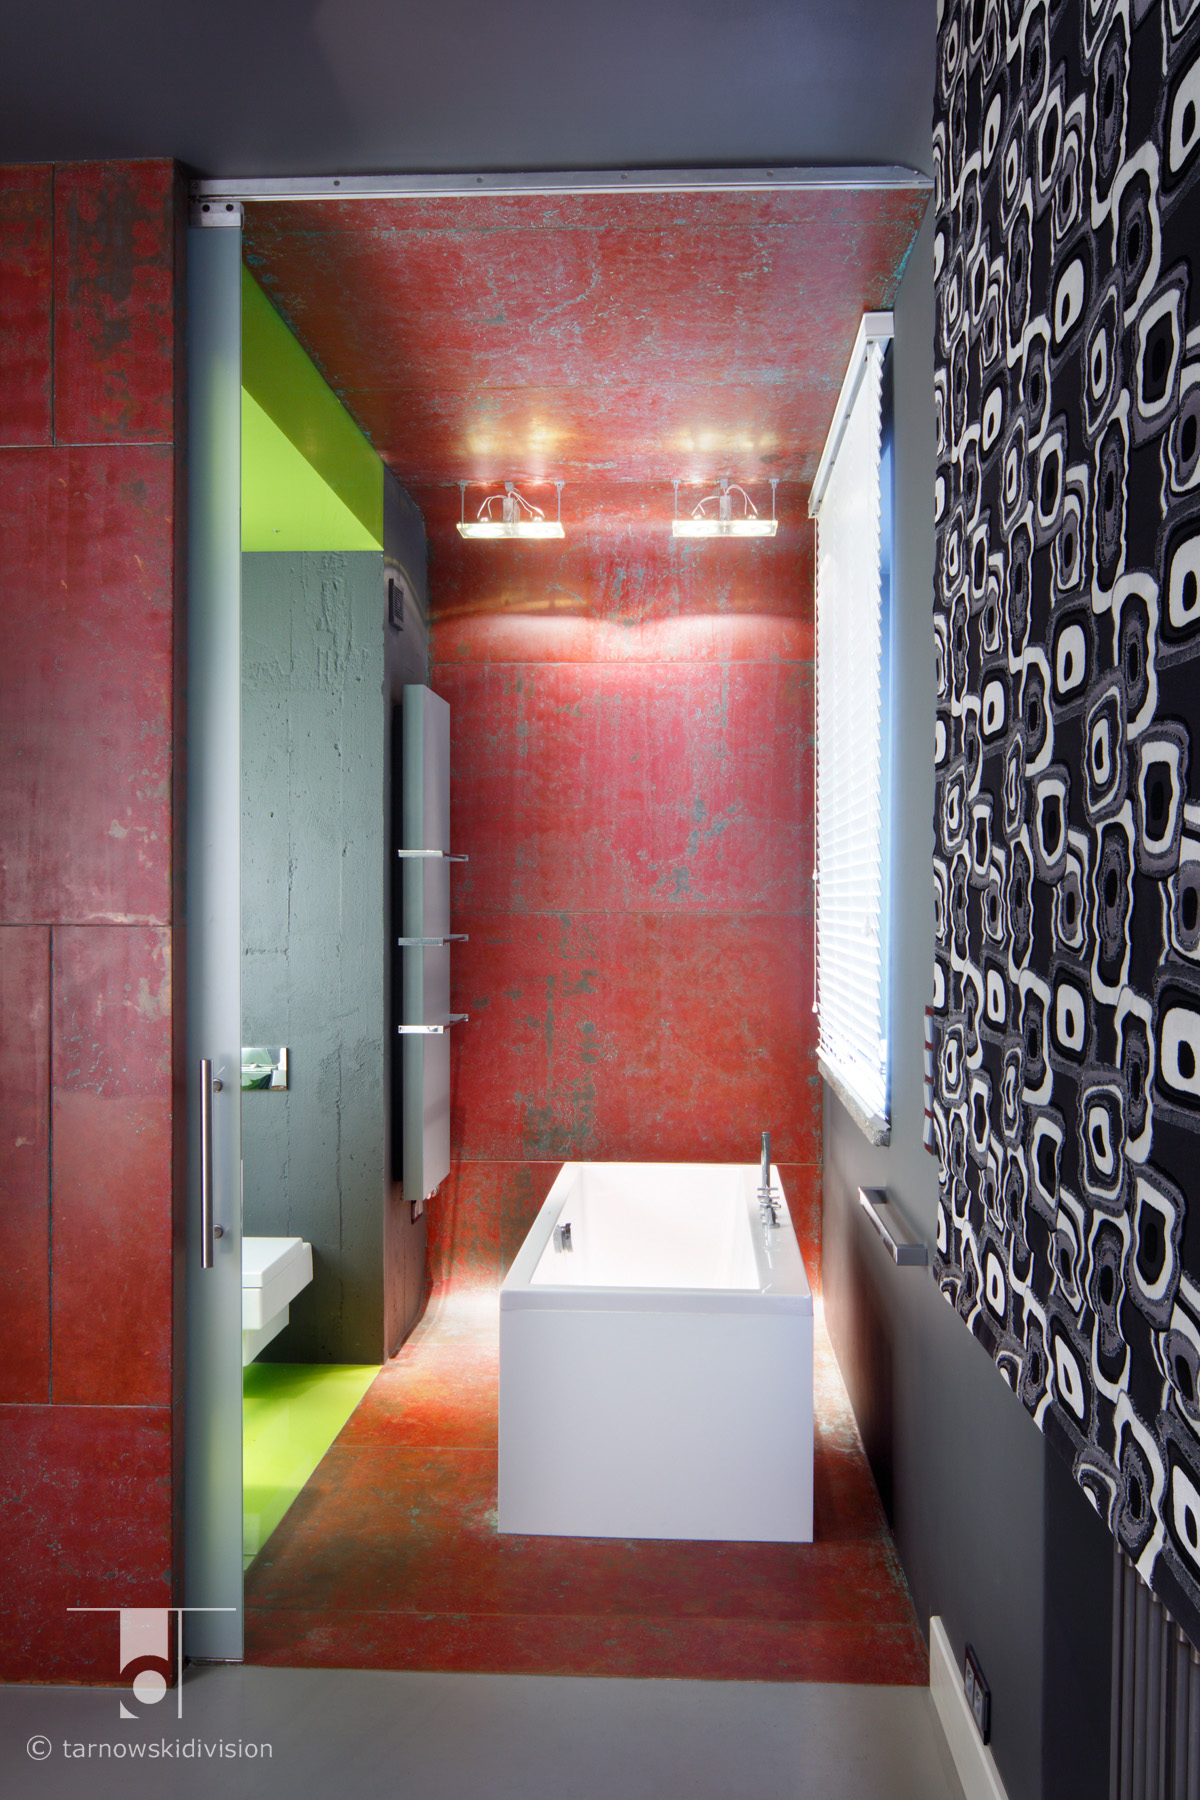 nowoczesna ekstrawagancka łazienka projekt wnętrz łazienki metal modern ekstravagant bathroom interior_tarnowski division